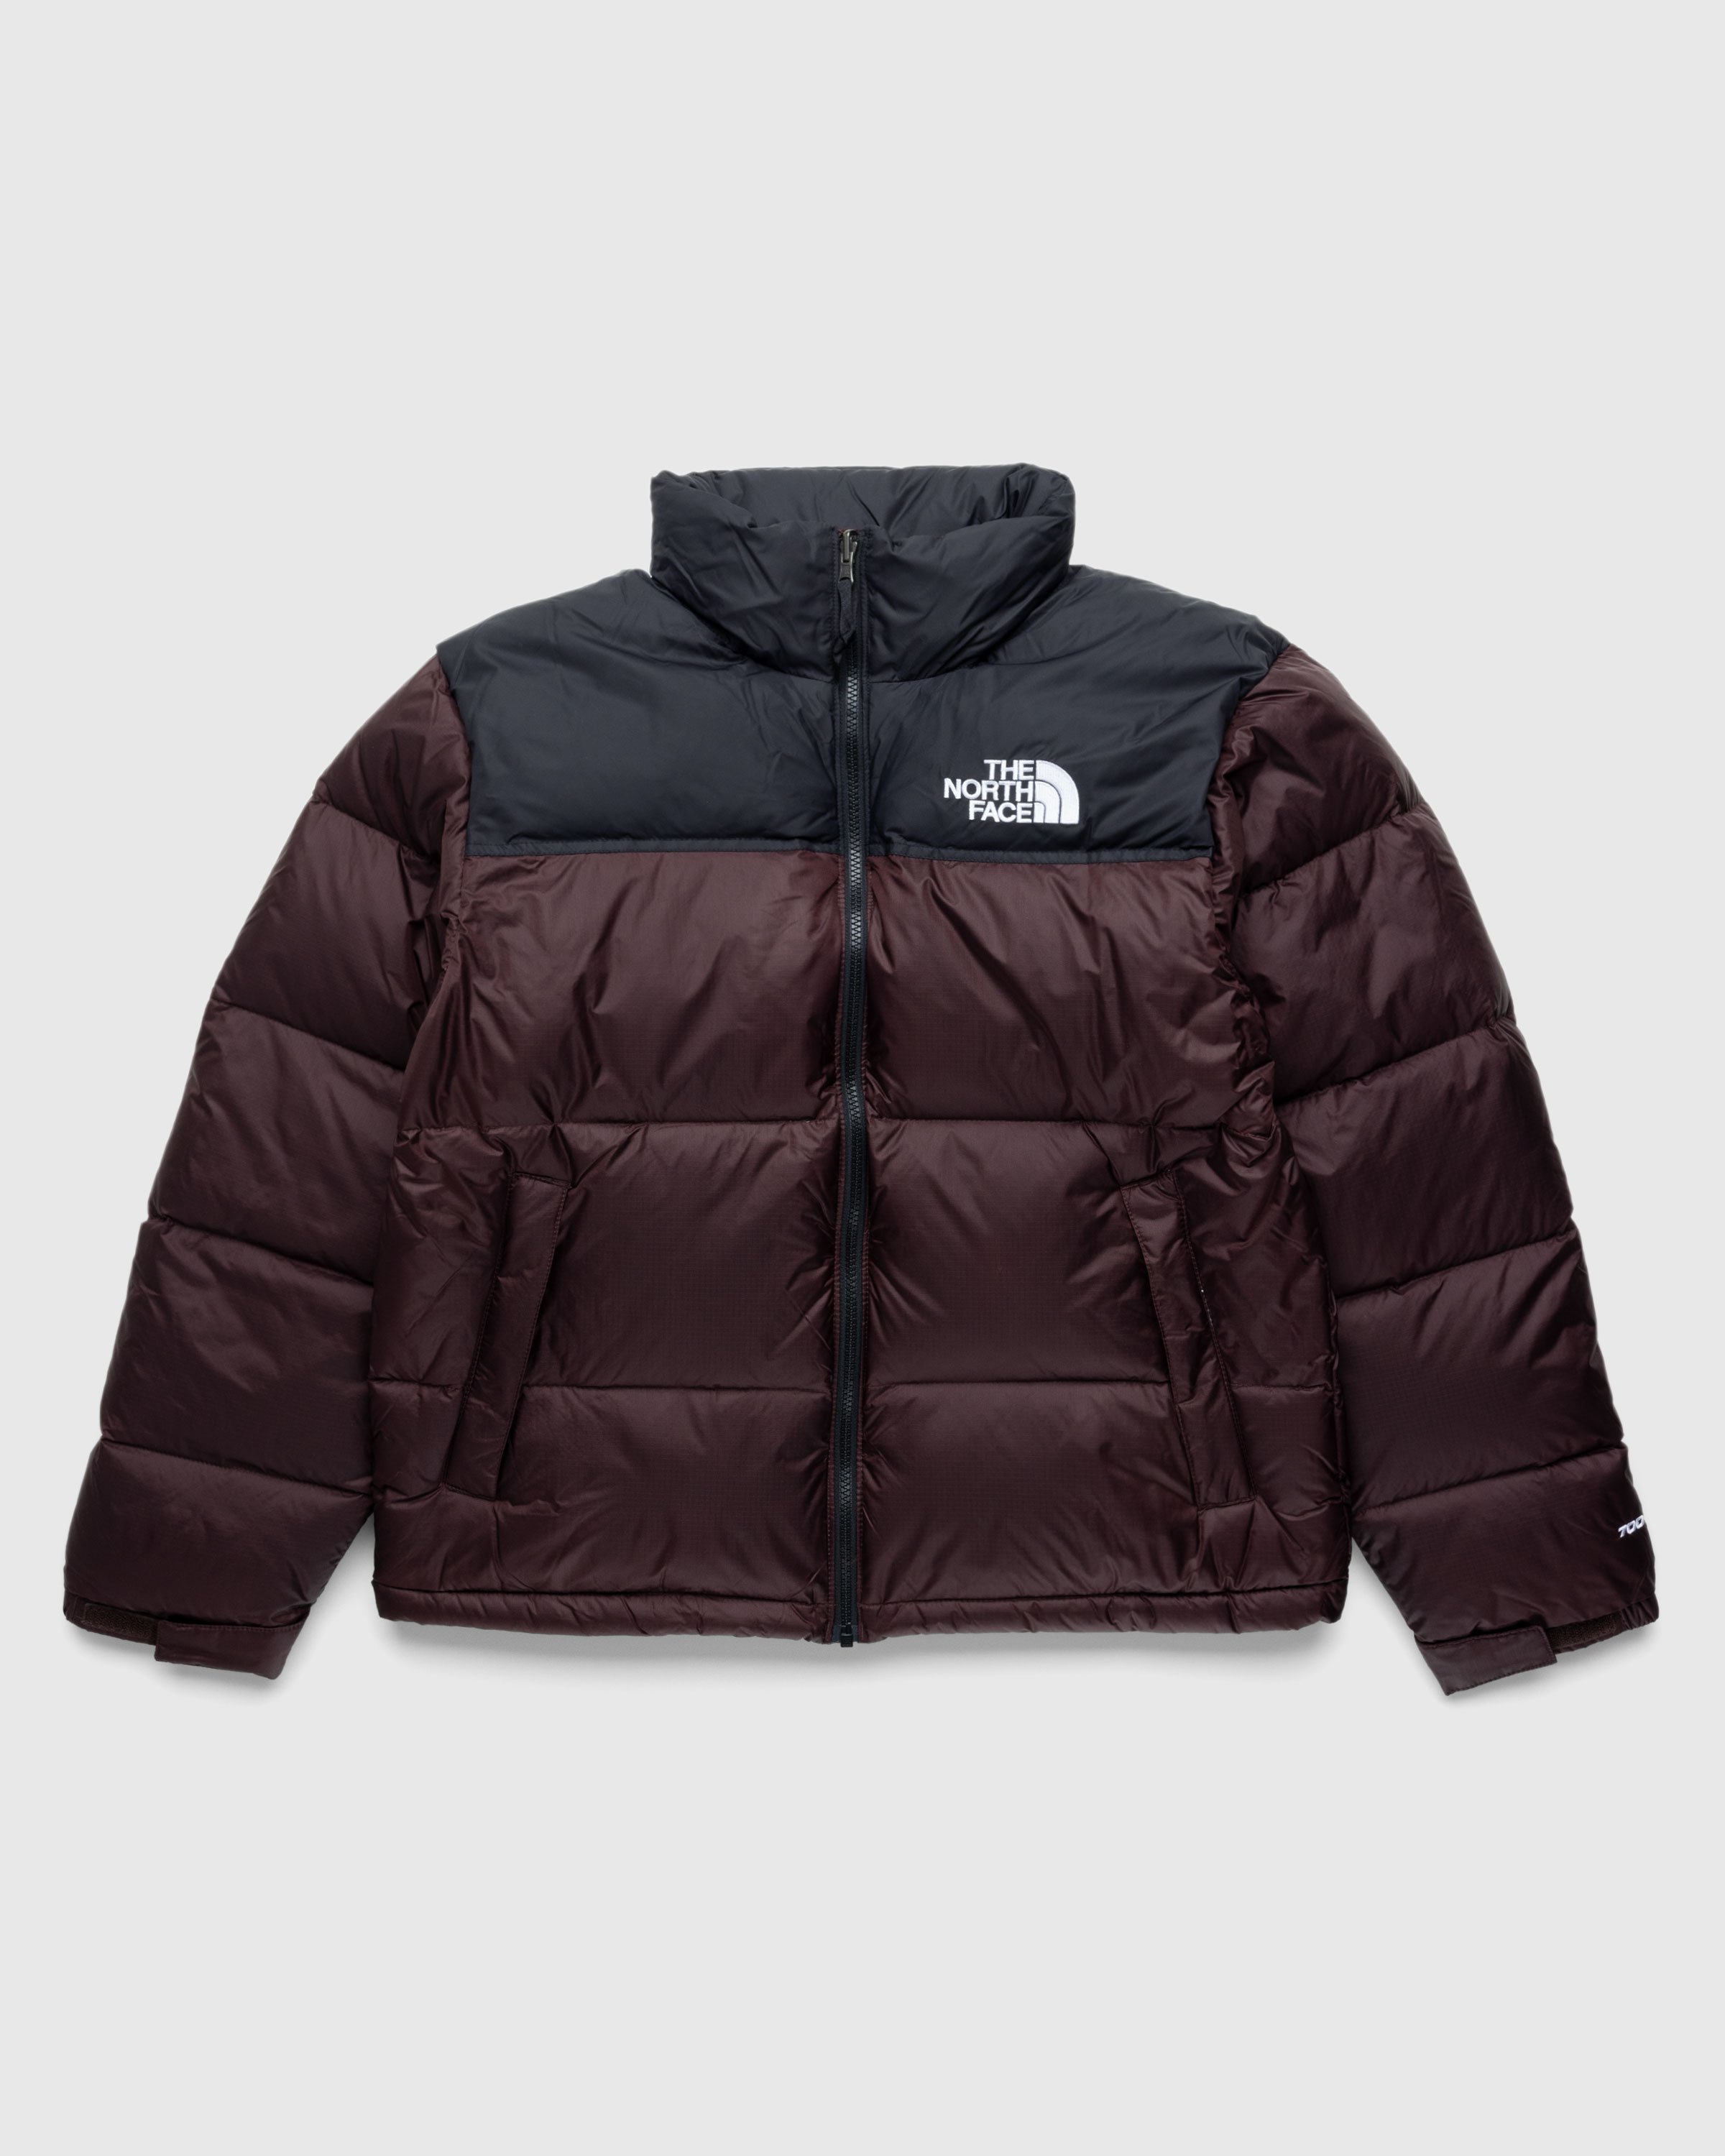 1996 Retro Nuptse jacket, The North Face, Shop Men's Down Jackets Online